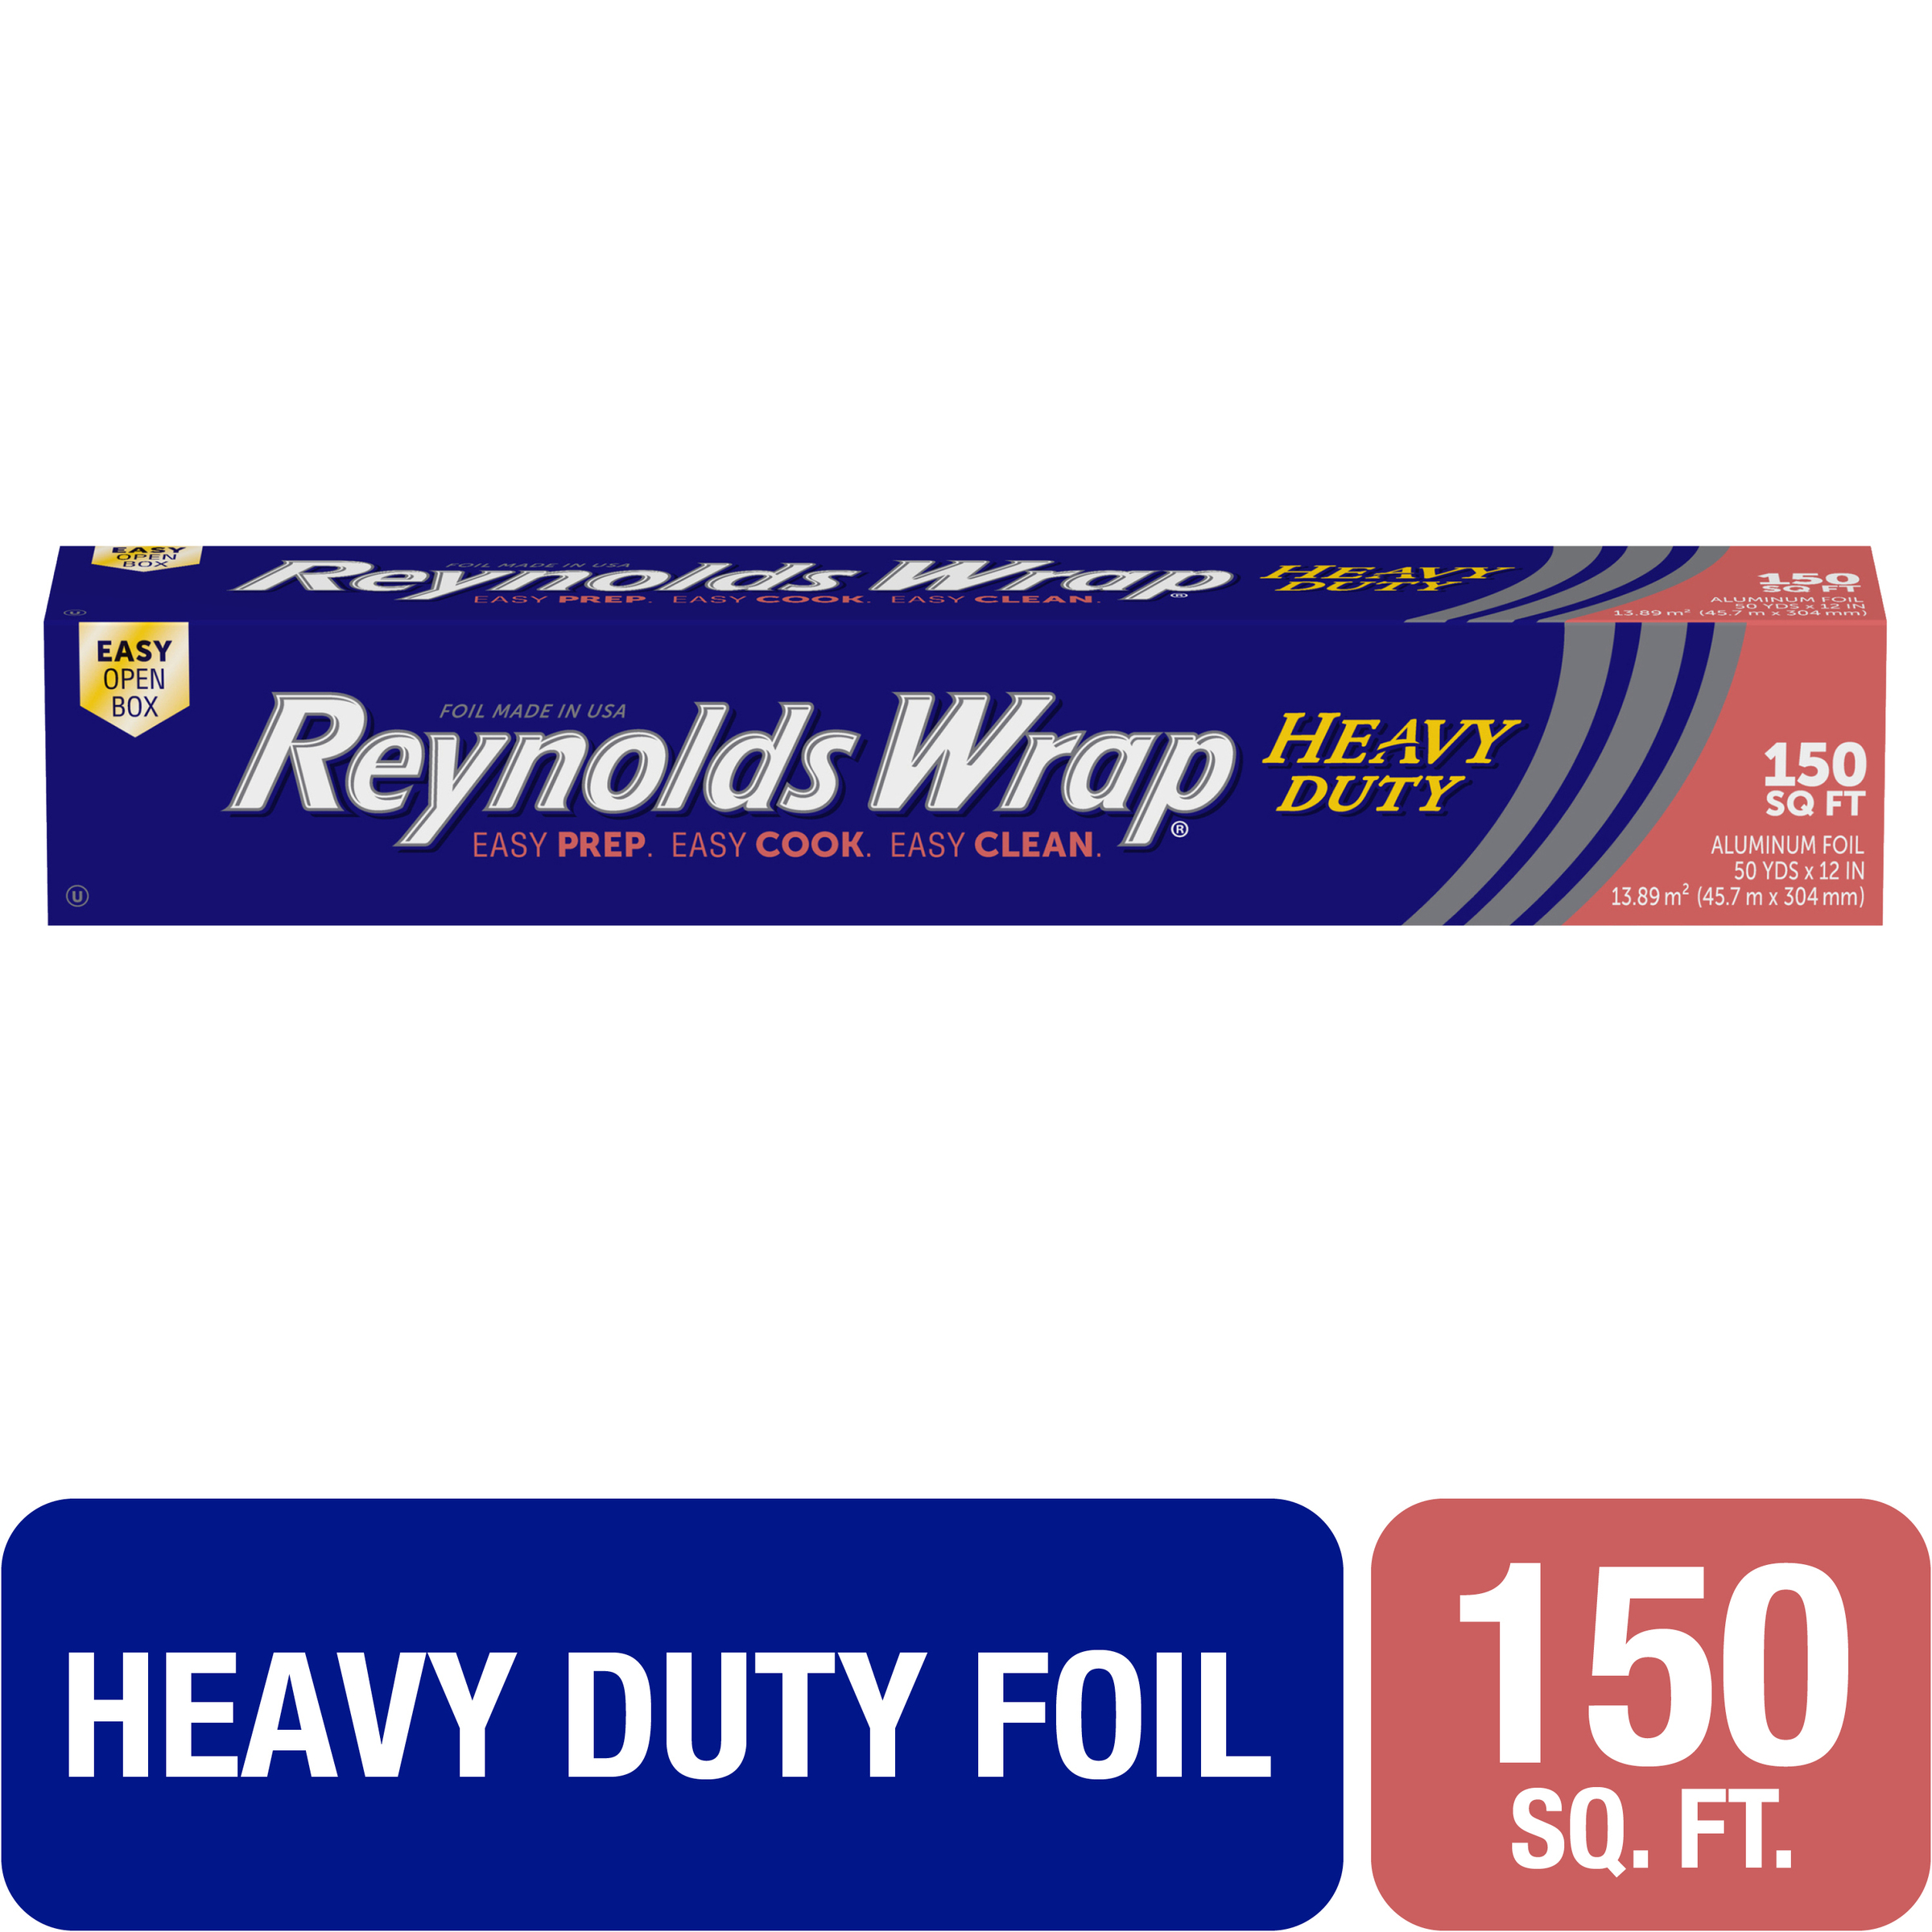 Reynolds Wrap Heavy Duty Aluminum Foil, 150 Square Feet - image 1 of 8